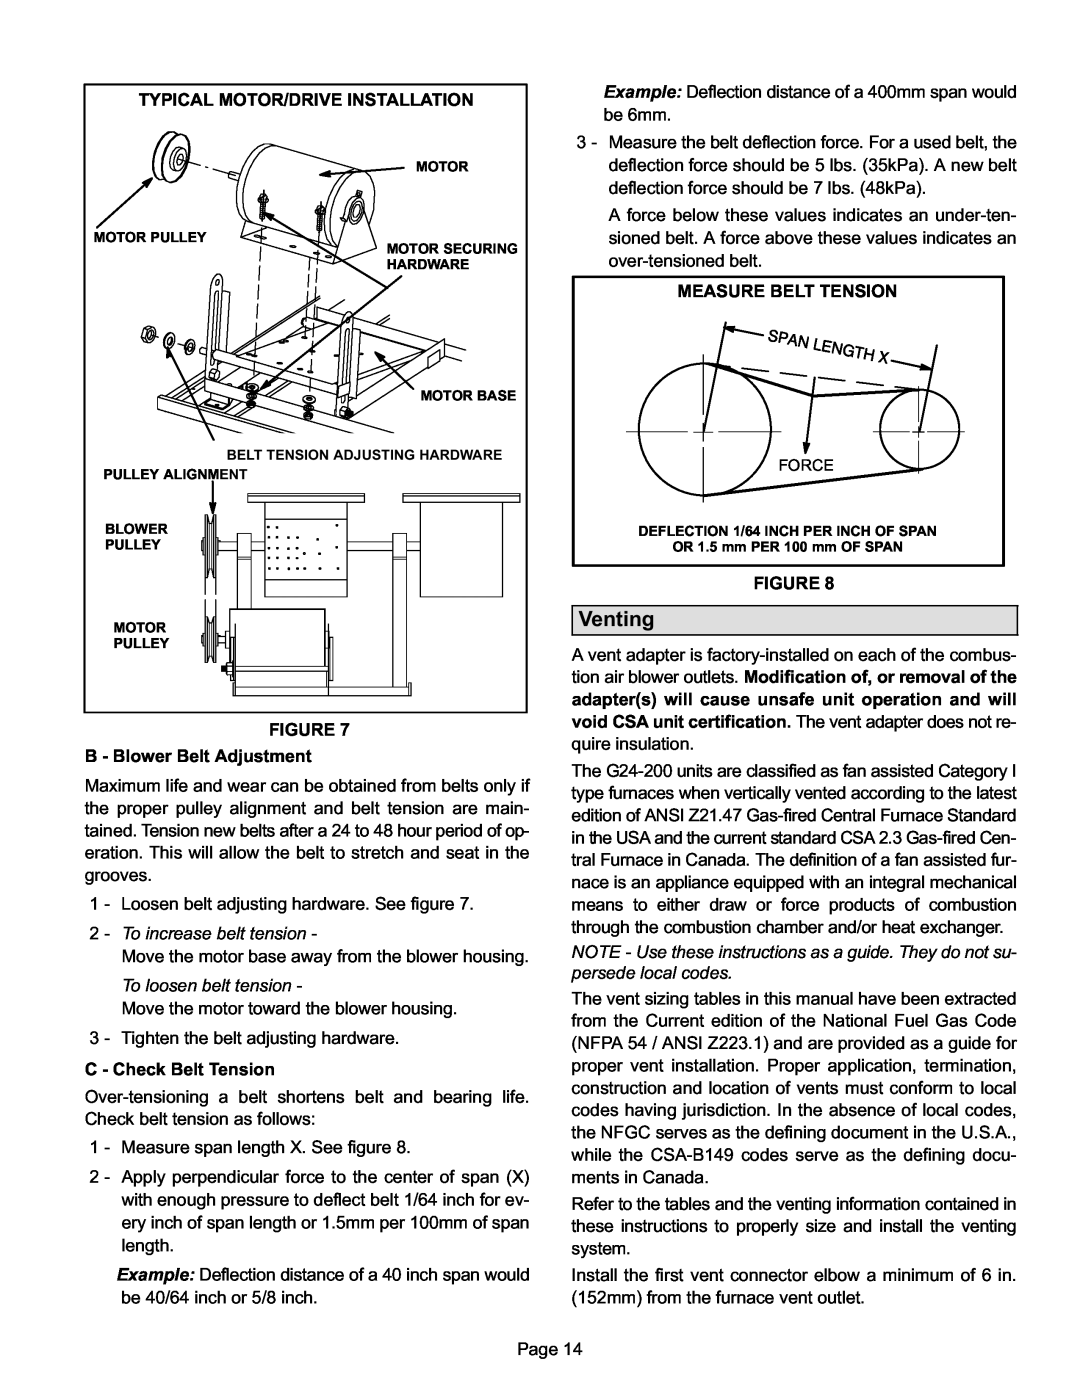 Lennox International Inc G24-200 installation instructions Venting 